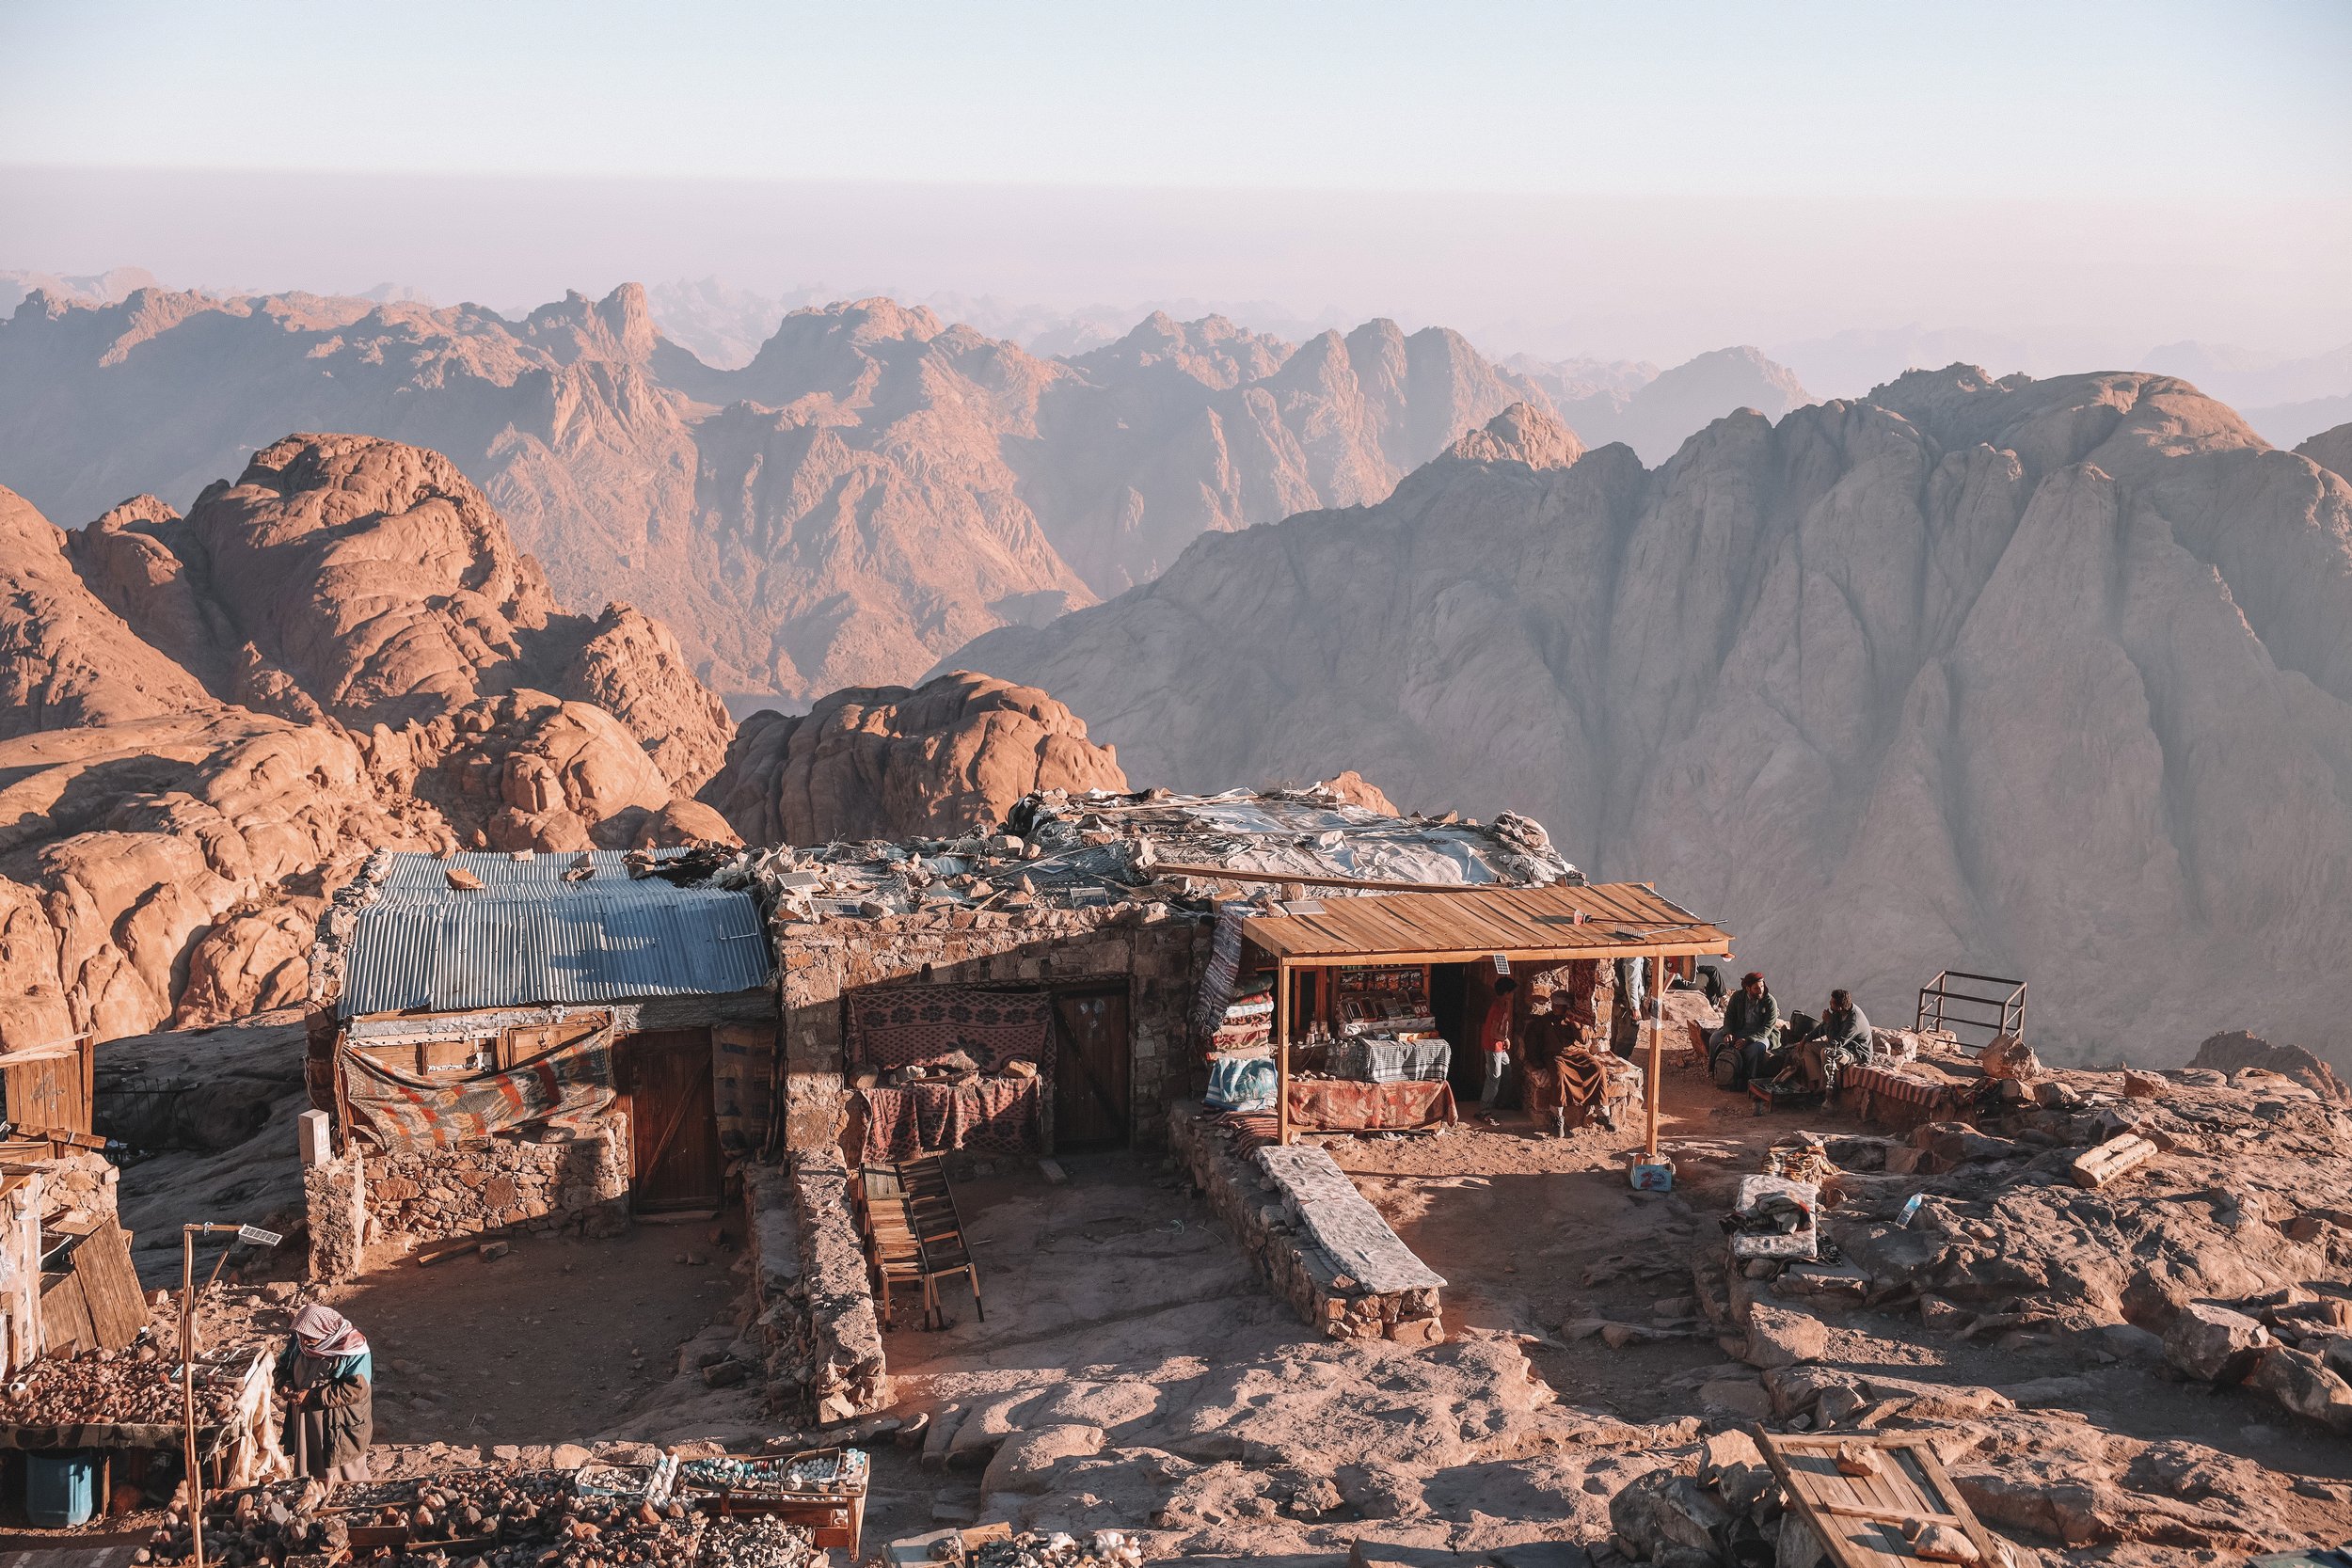 Bedouin camp - Mount Sinai - Sinai Peninsula - Egypt